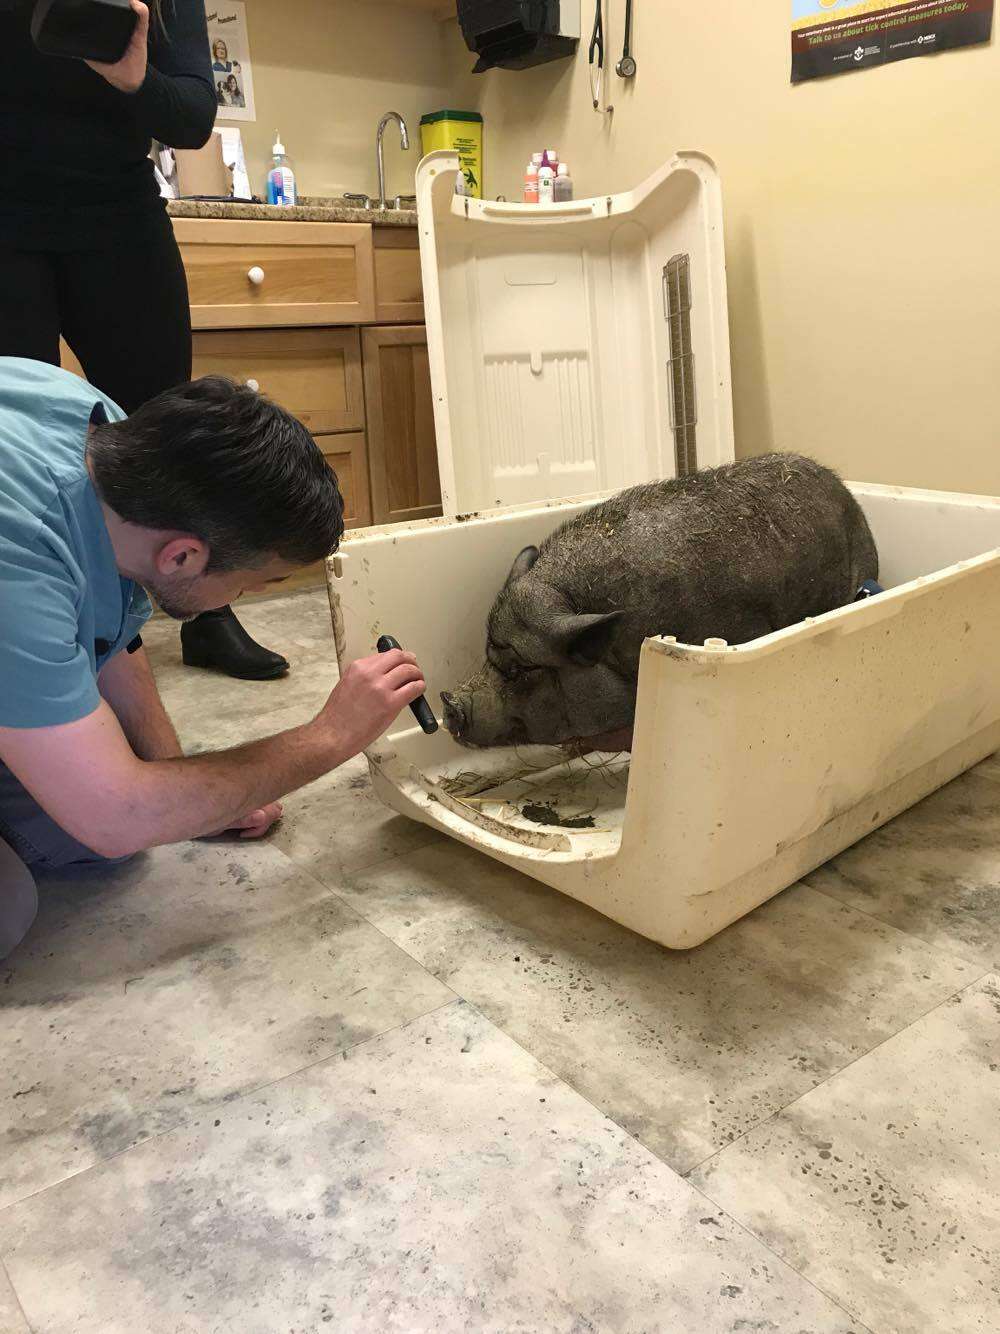 Neglected pet pig getting help at Ontario vet